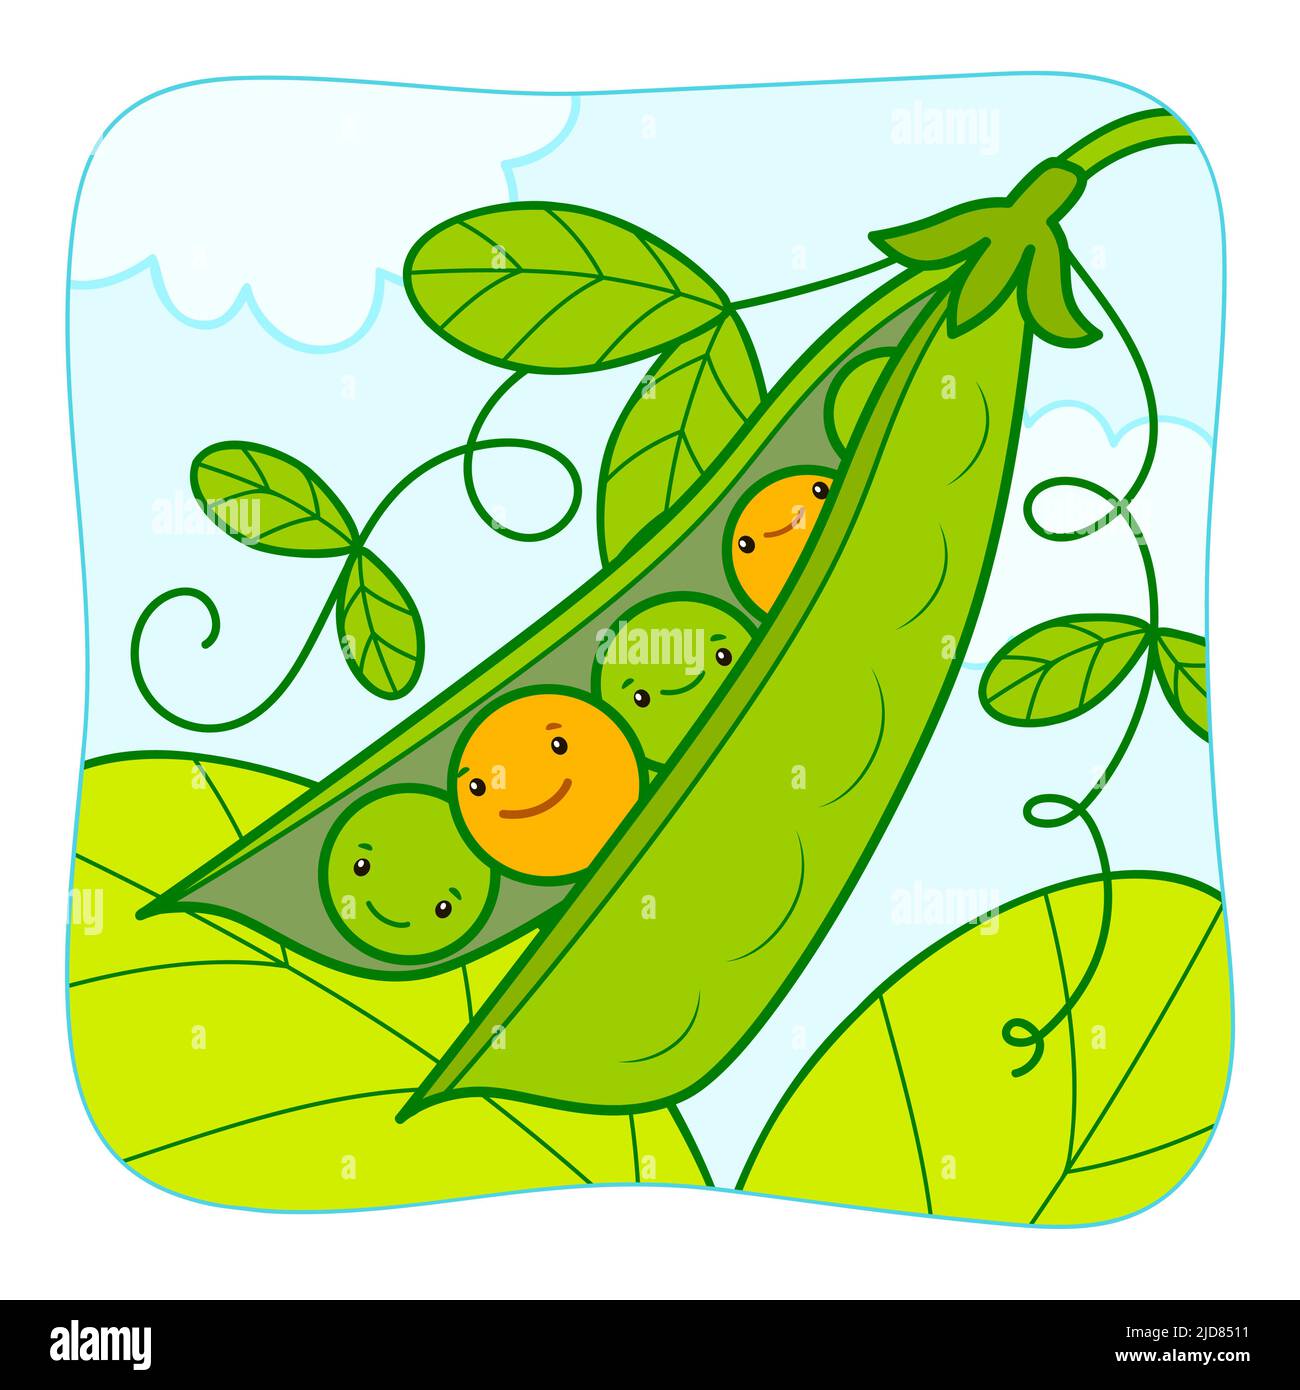 Cute Peas cartoon. Peas clipart vector illustration. Nature background  Stock Vector Image & Art - Alamy